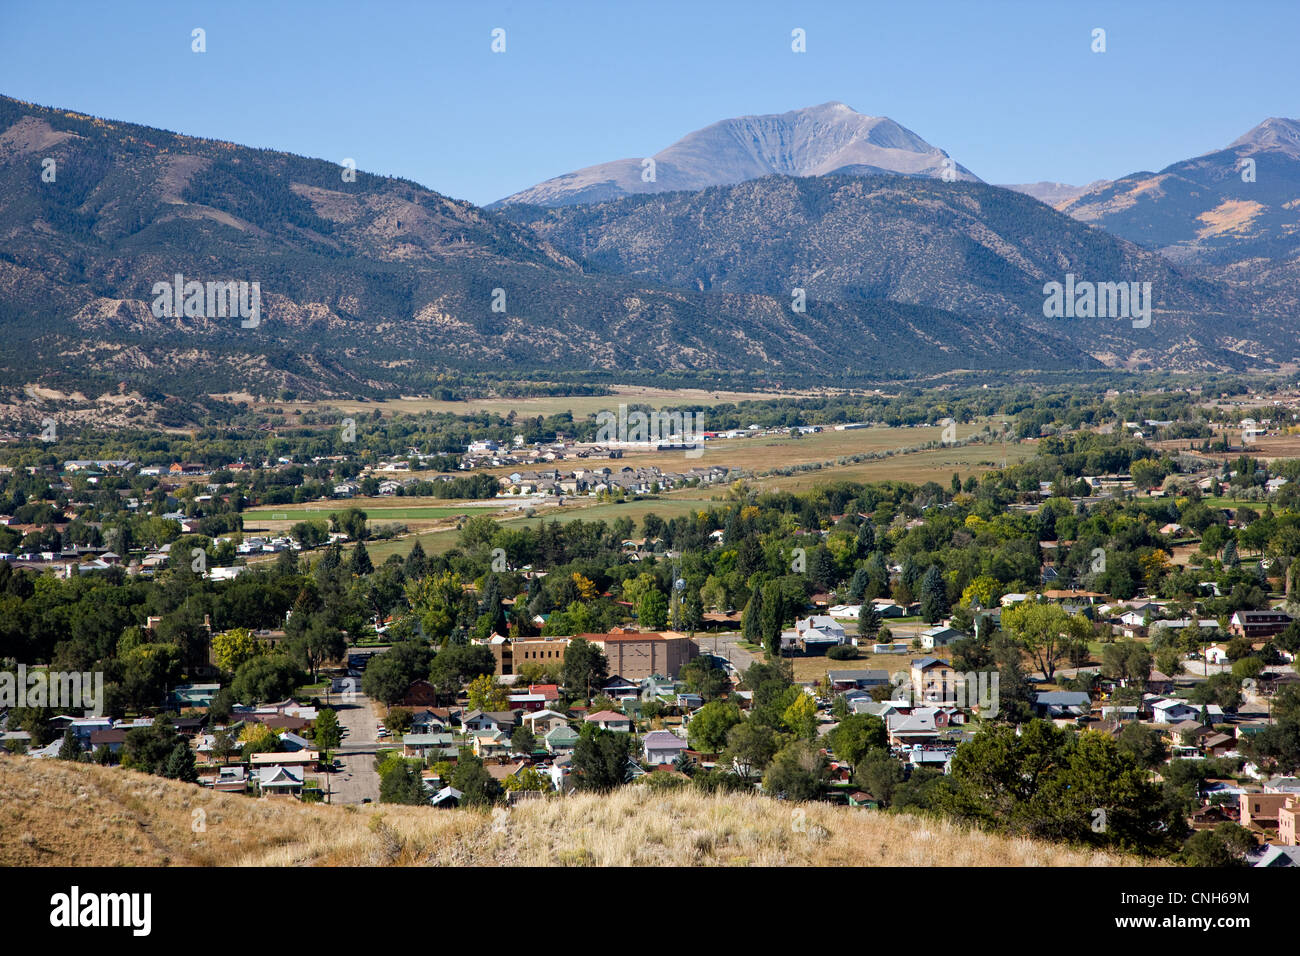 View of the small mountain town of Salida, Colorado, taken from atop Tenderfoot Mountain (S Mountain), USA Stock Photo